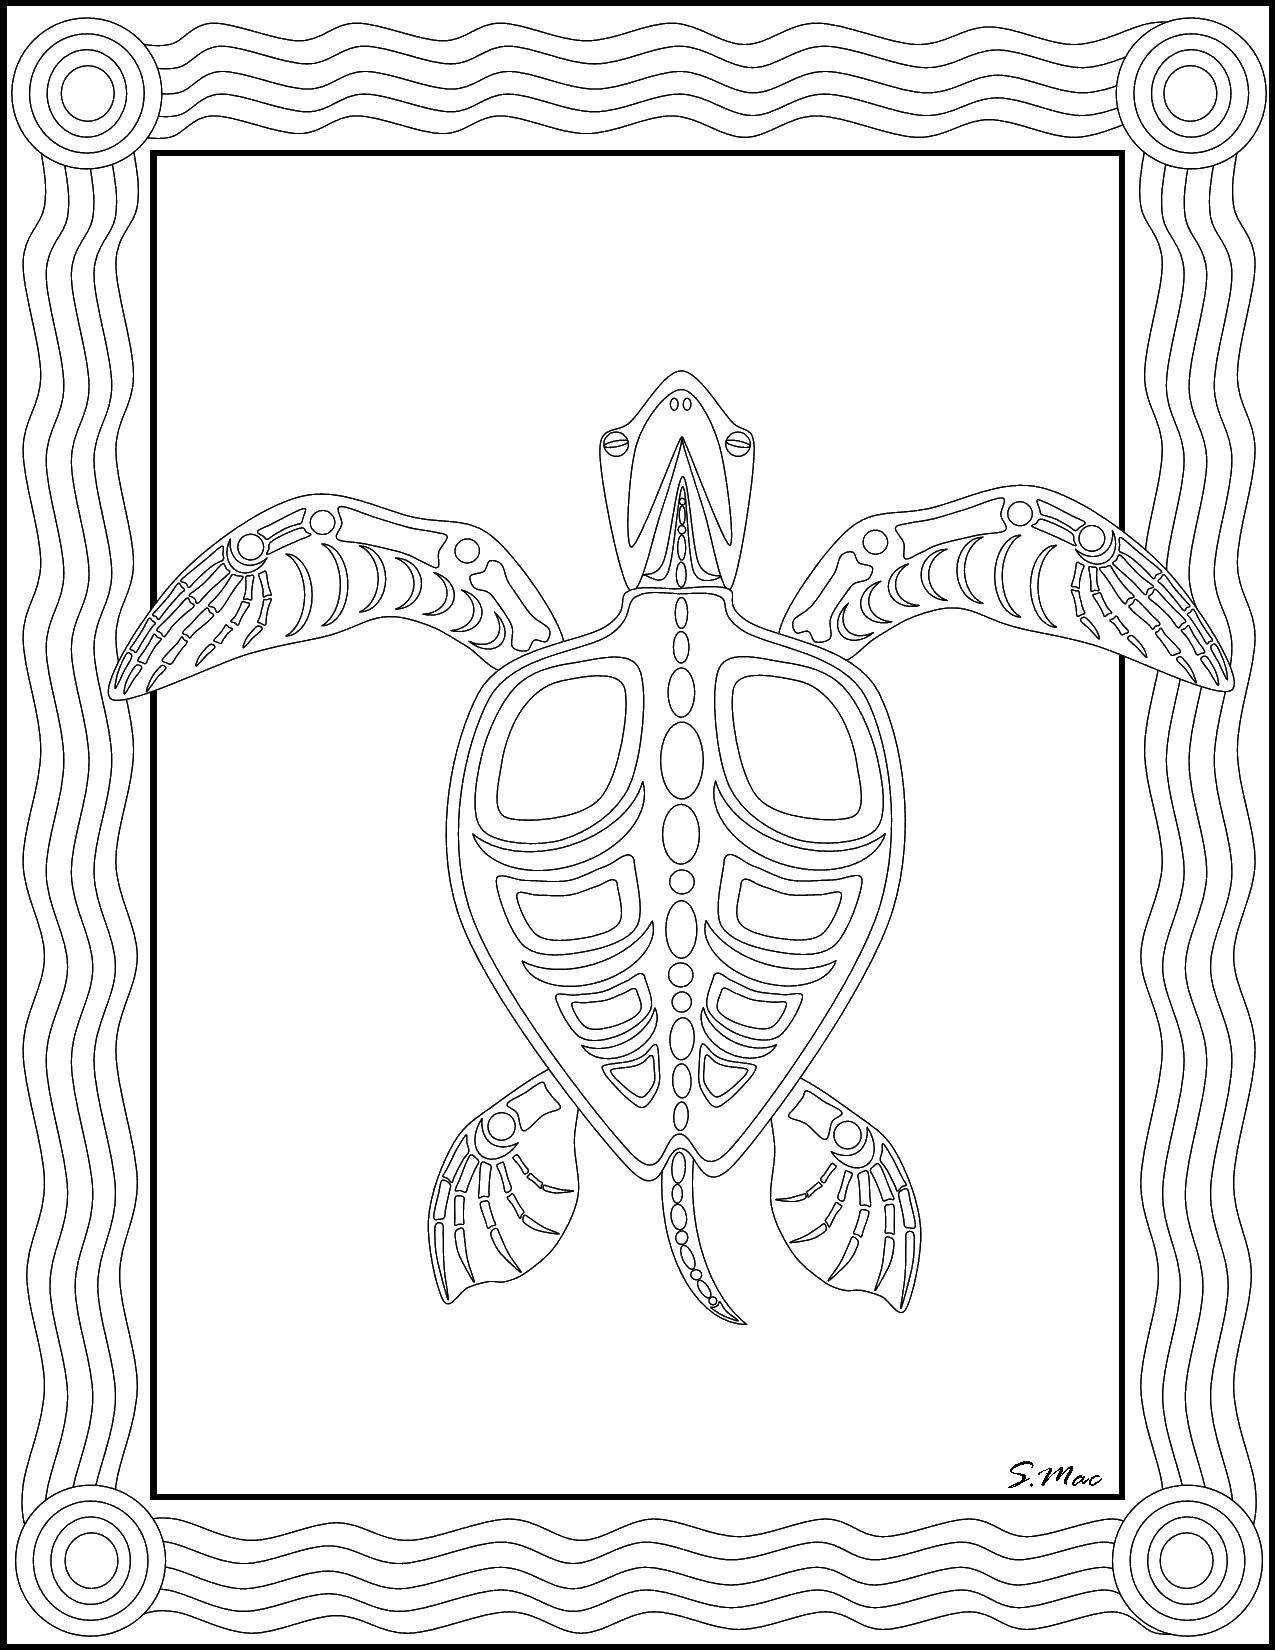 Название: Раскраска Морская черепаха в узорах. Категория: морская черепаха. Теги: черепаха, море, узоры.